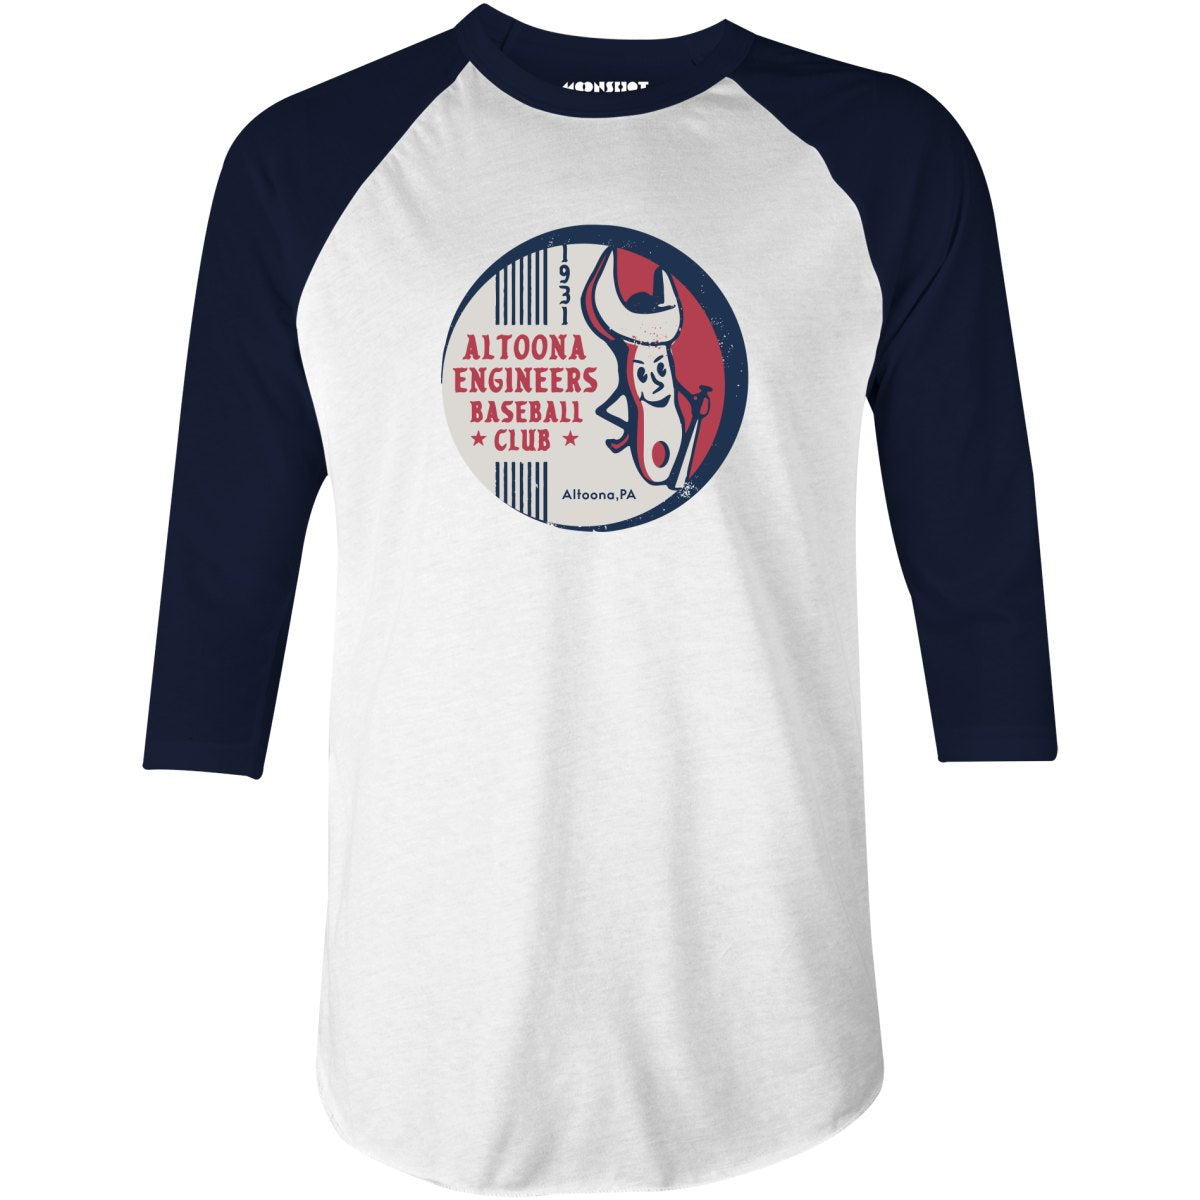 Altoona Engineers - Pennsylvania - Vintage Defunct Baseball Teams - 3/4 Sleeve Raglan T-Shirt